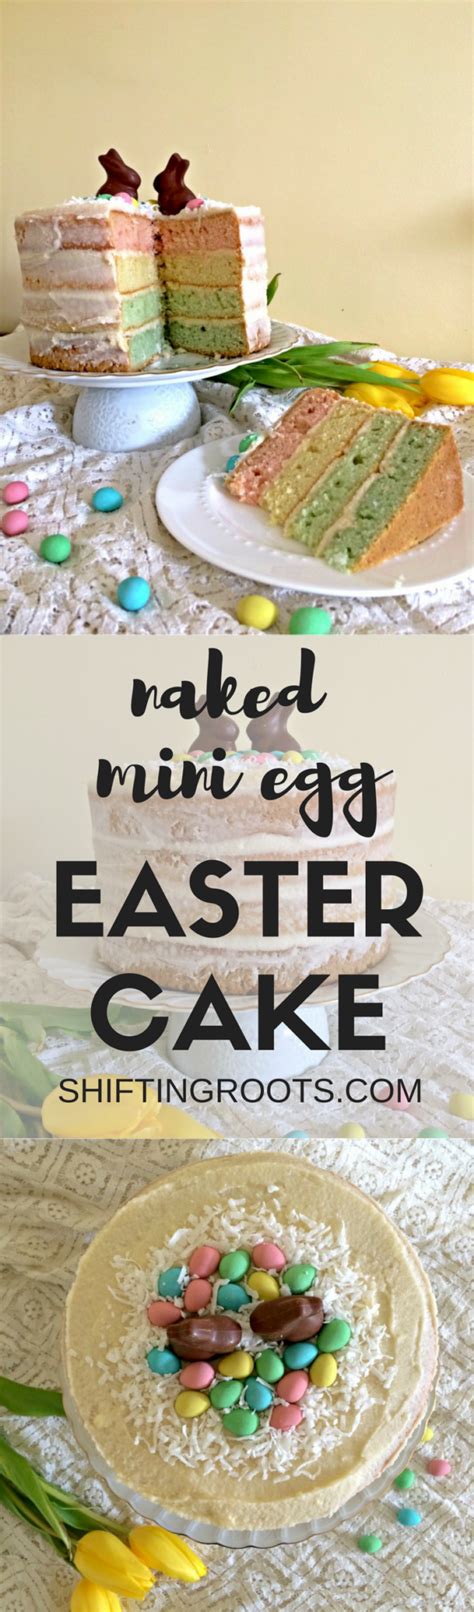 Naked Mini Egg Easter Cake Shifting Roots